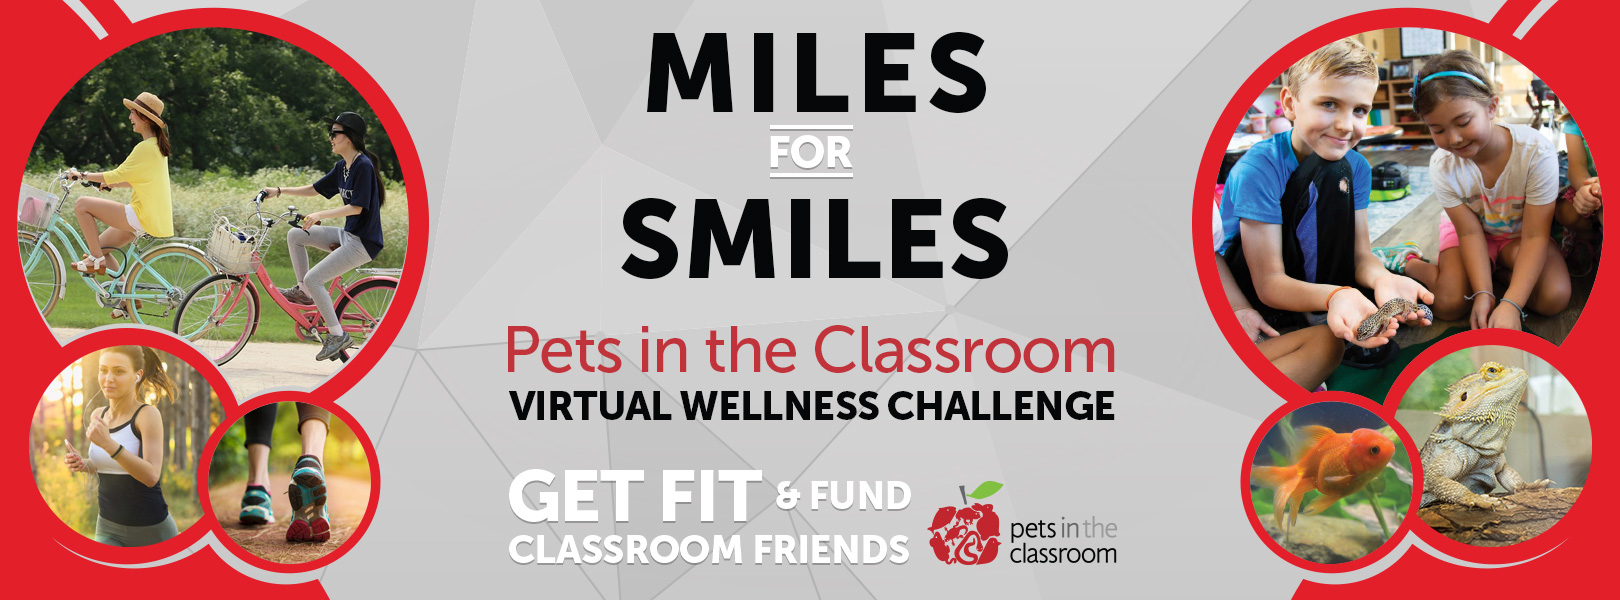 Miles for Smiles Virtual Wellness Challenge